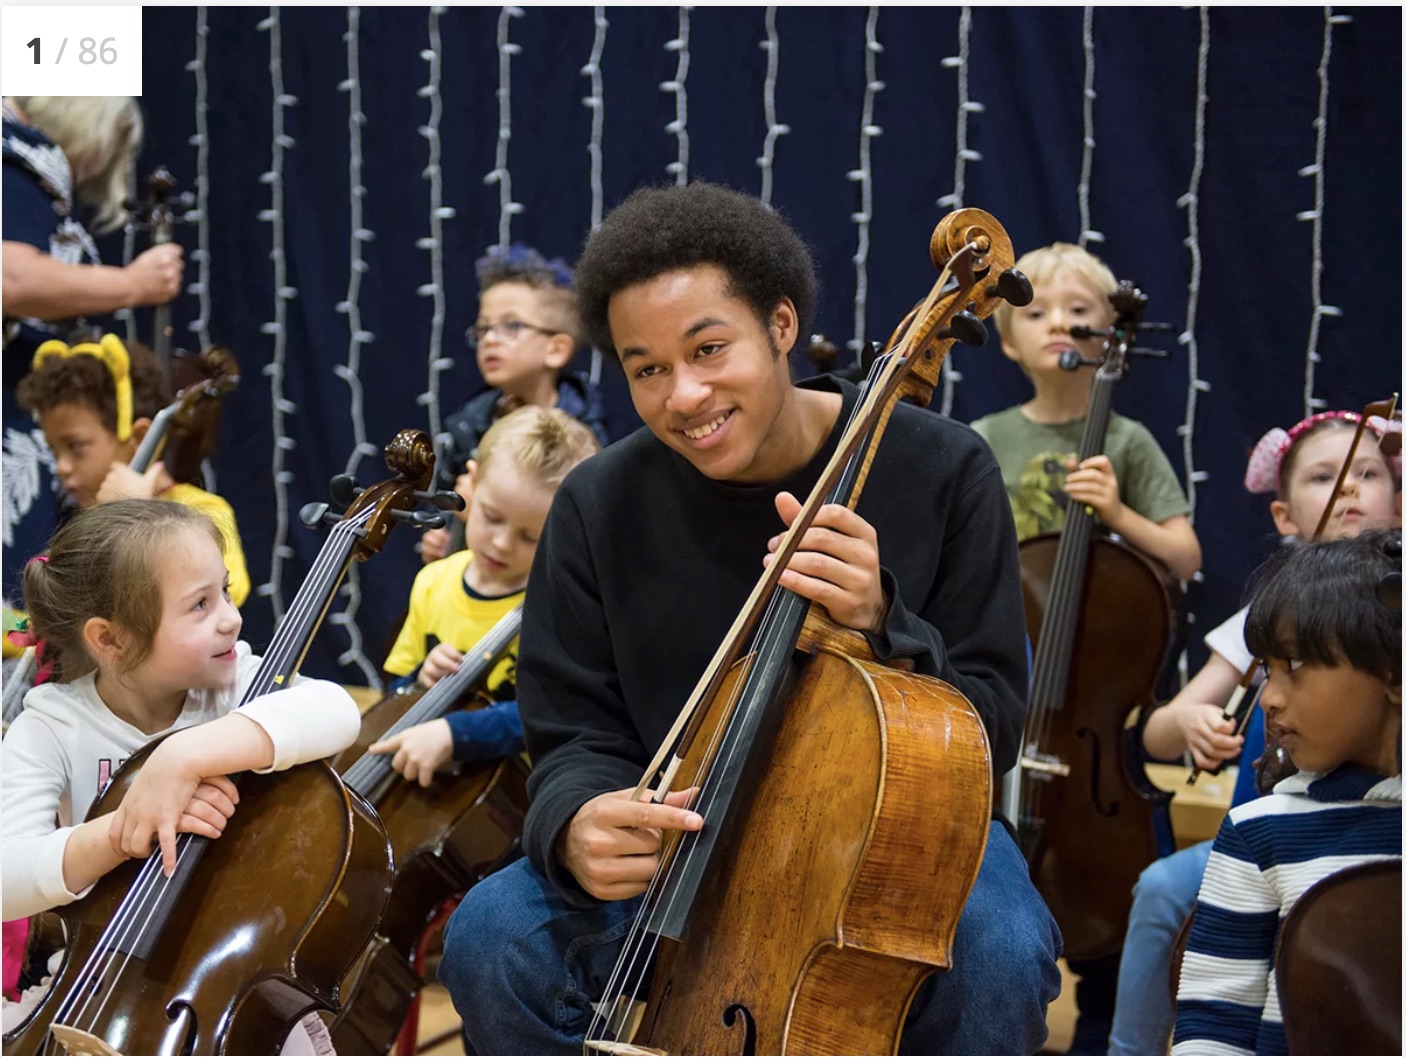 Musician Inspiring the Next Generation of Cellist True Hearts Unite